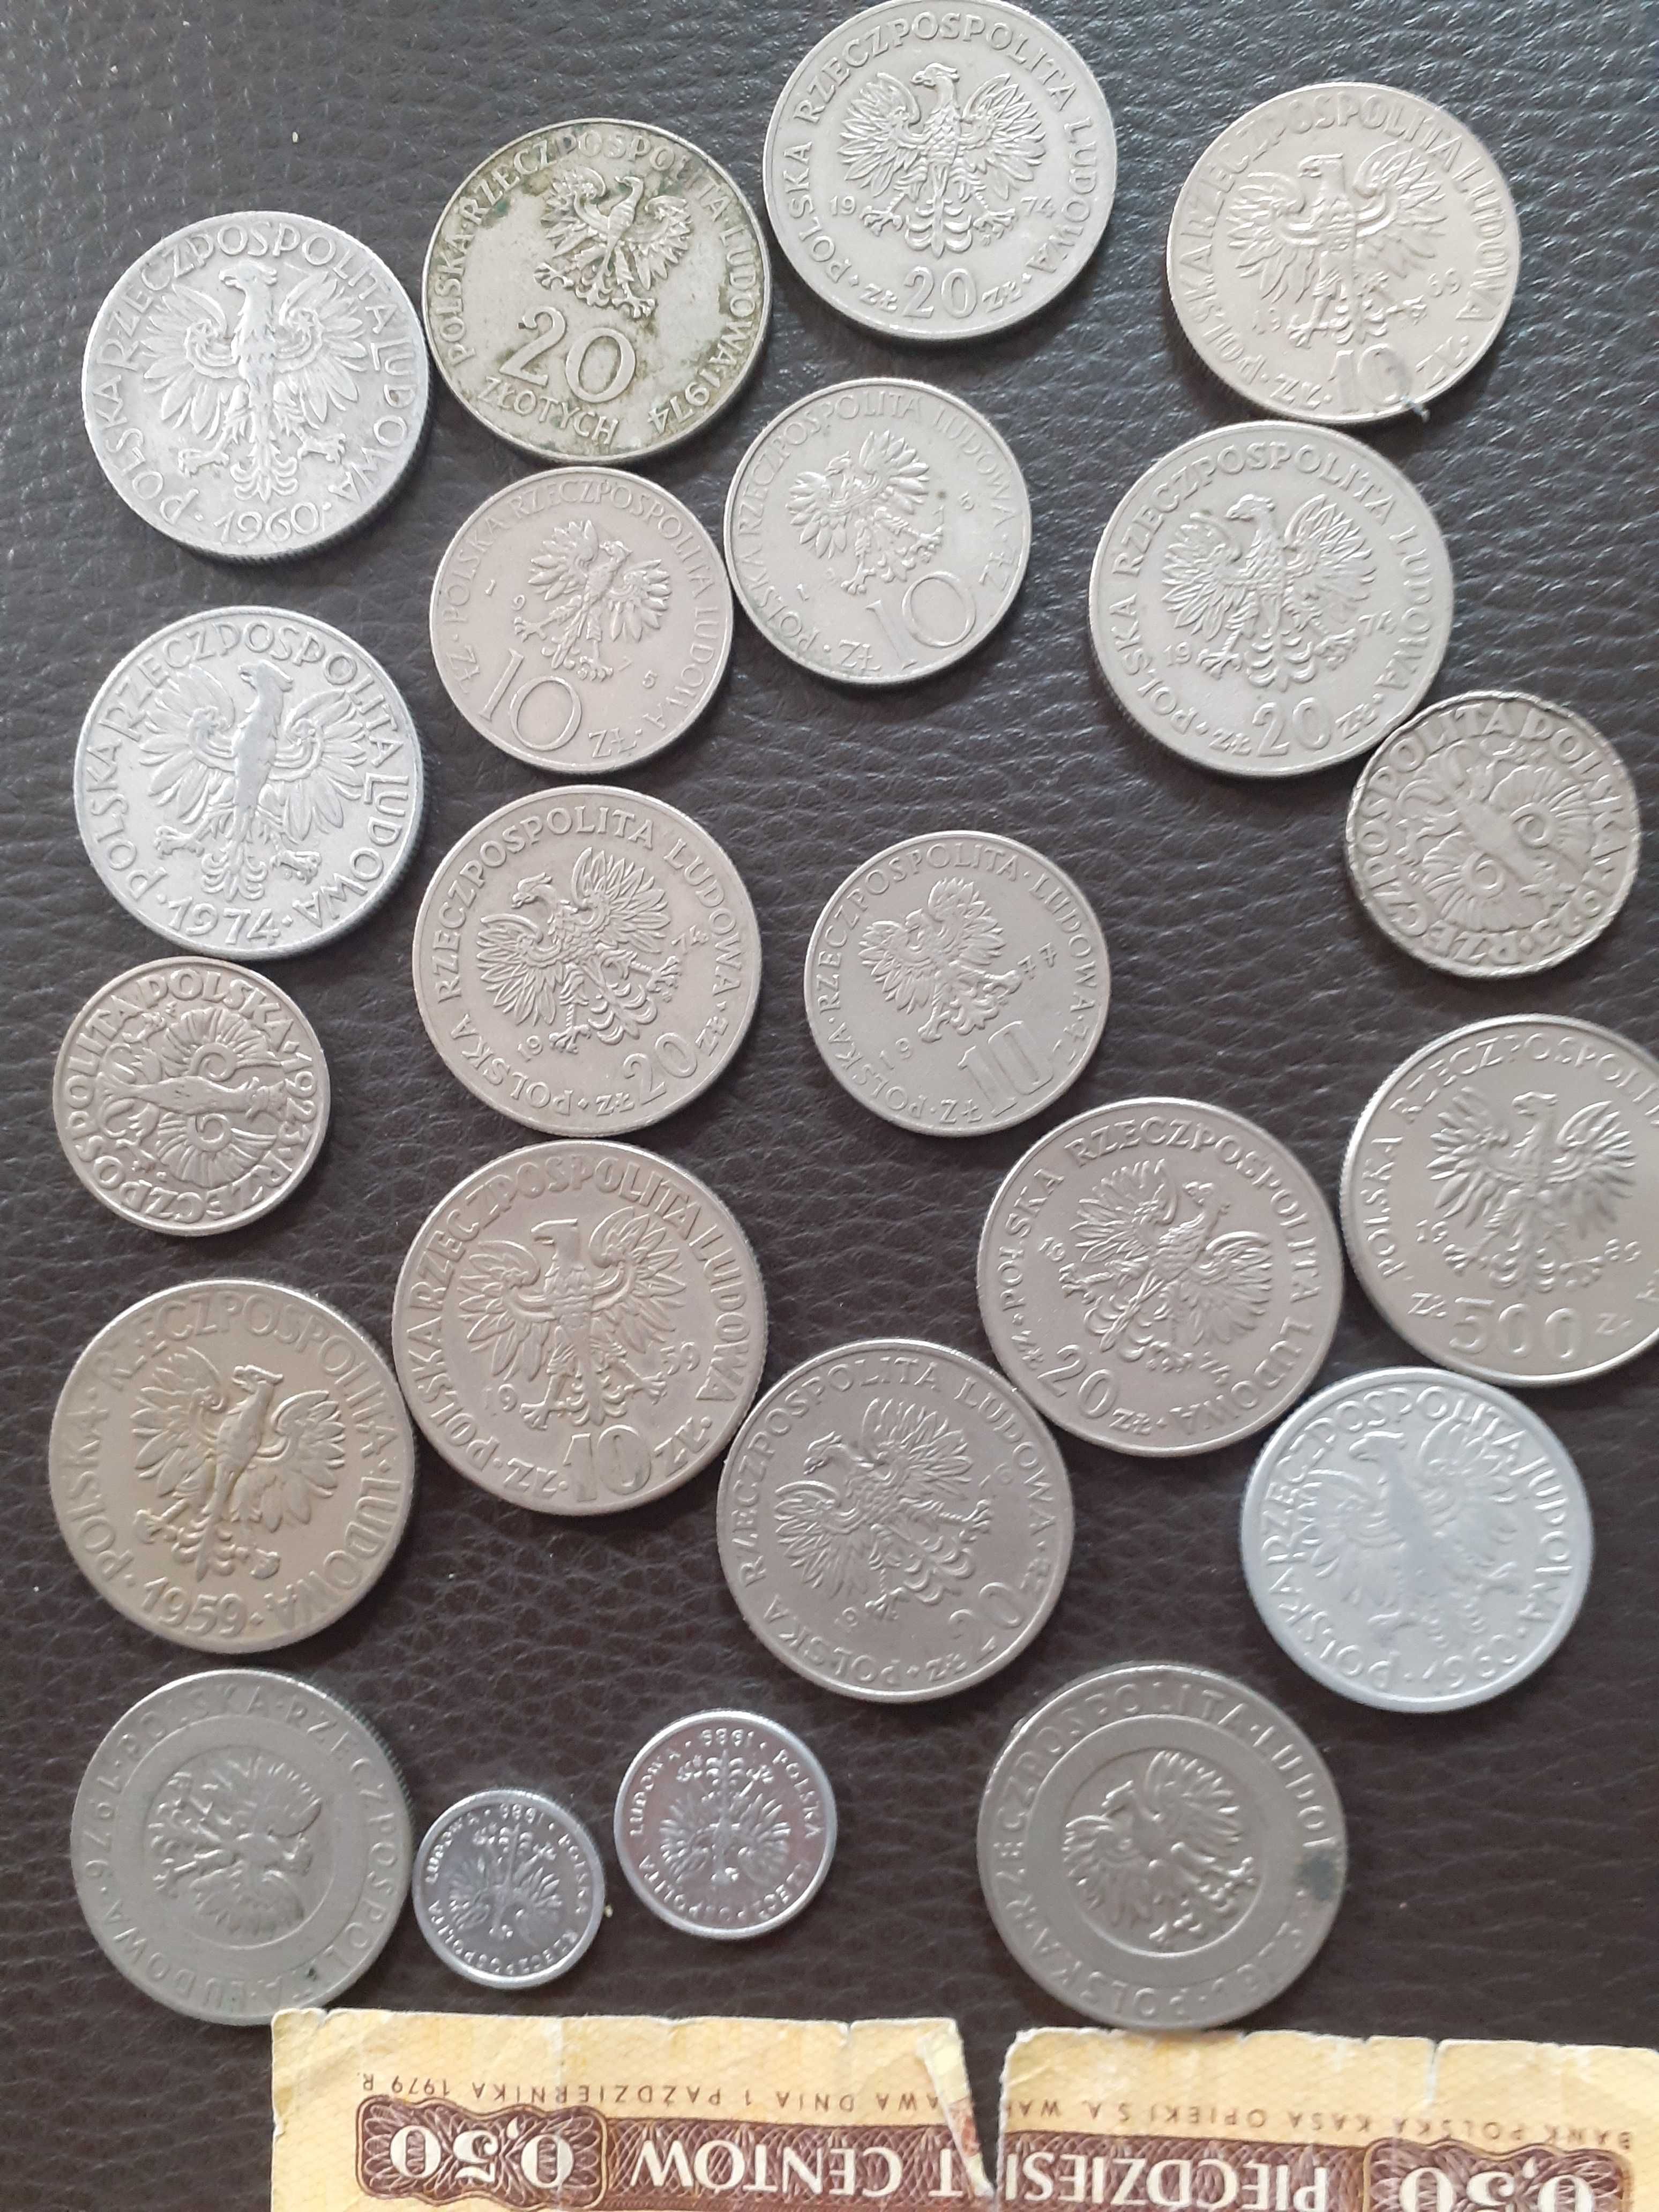 Stare monety i banknoty różne prl